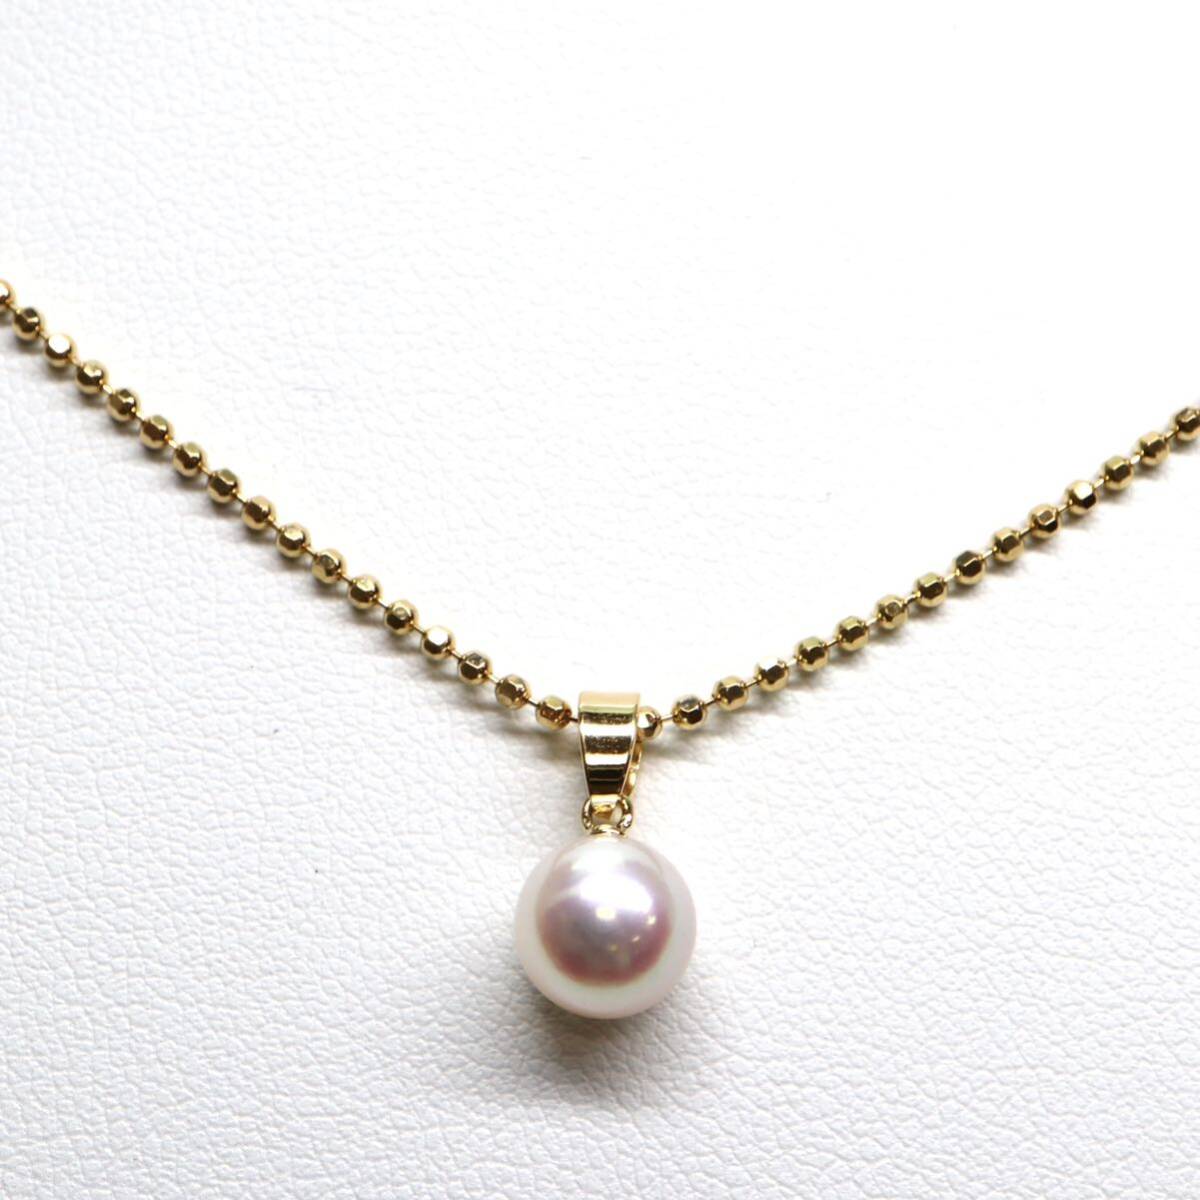 MIKIMOTO(ミキモト)《K18 アコヤ本真珠ネックレス》A 4.2g 約39.5cm pearl necklace パール jewelry EC3/EC4の画像1